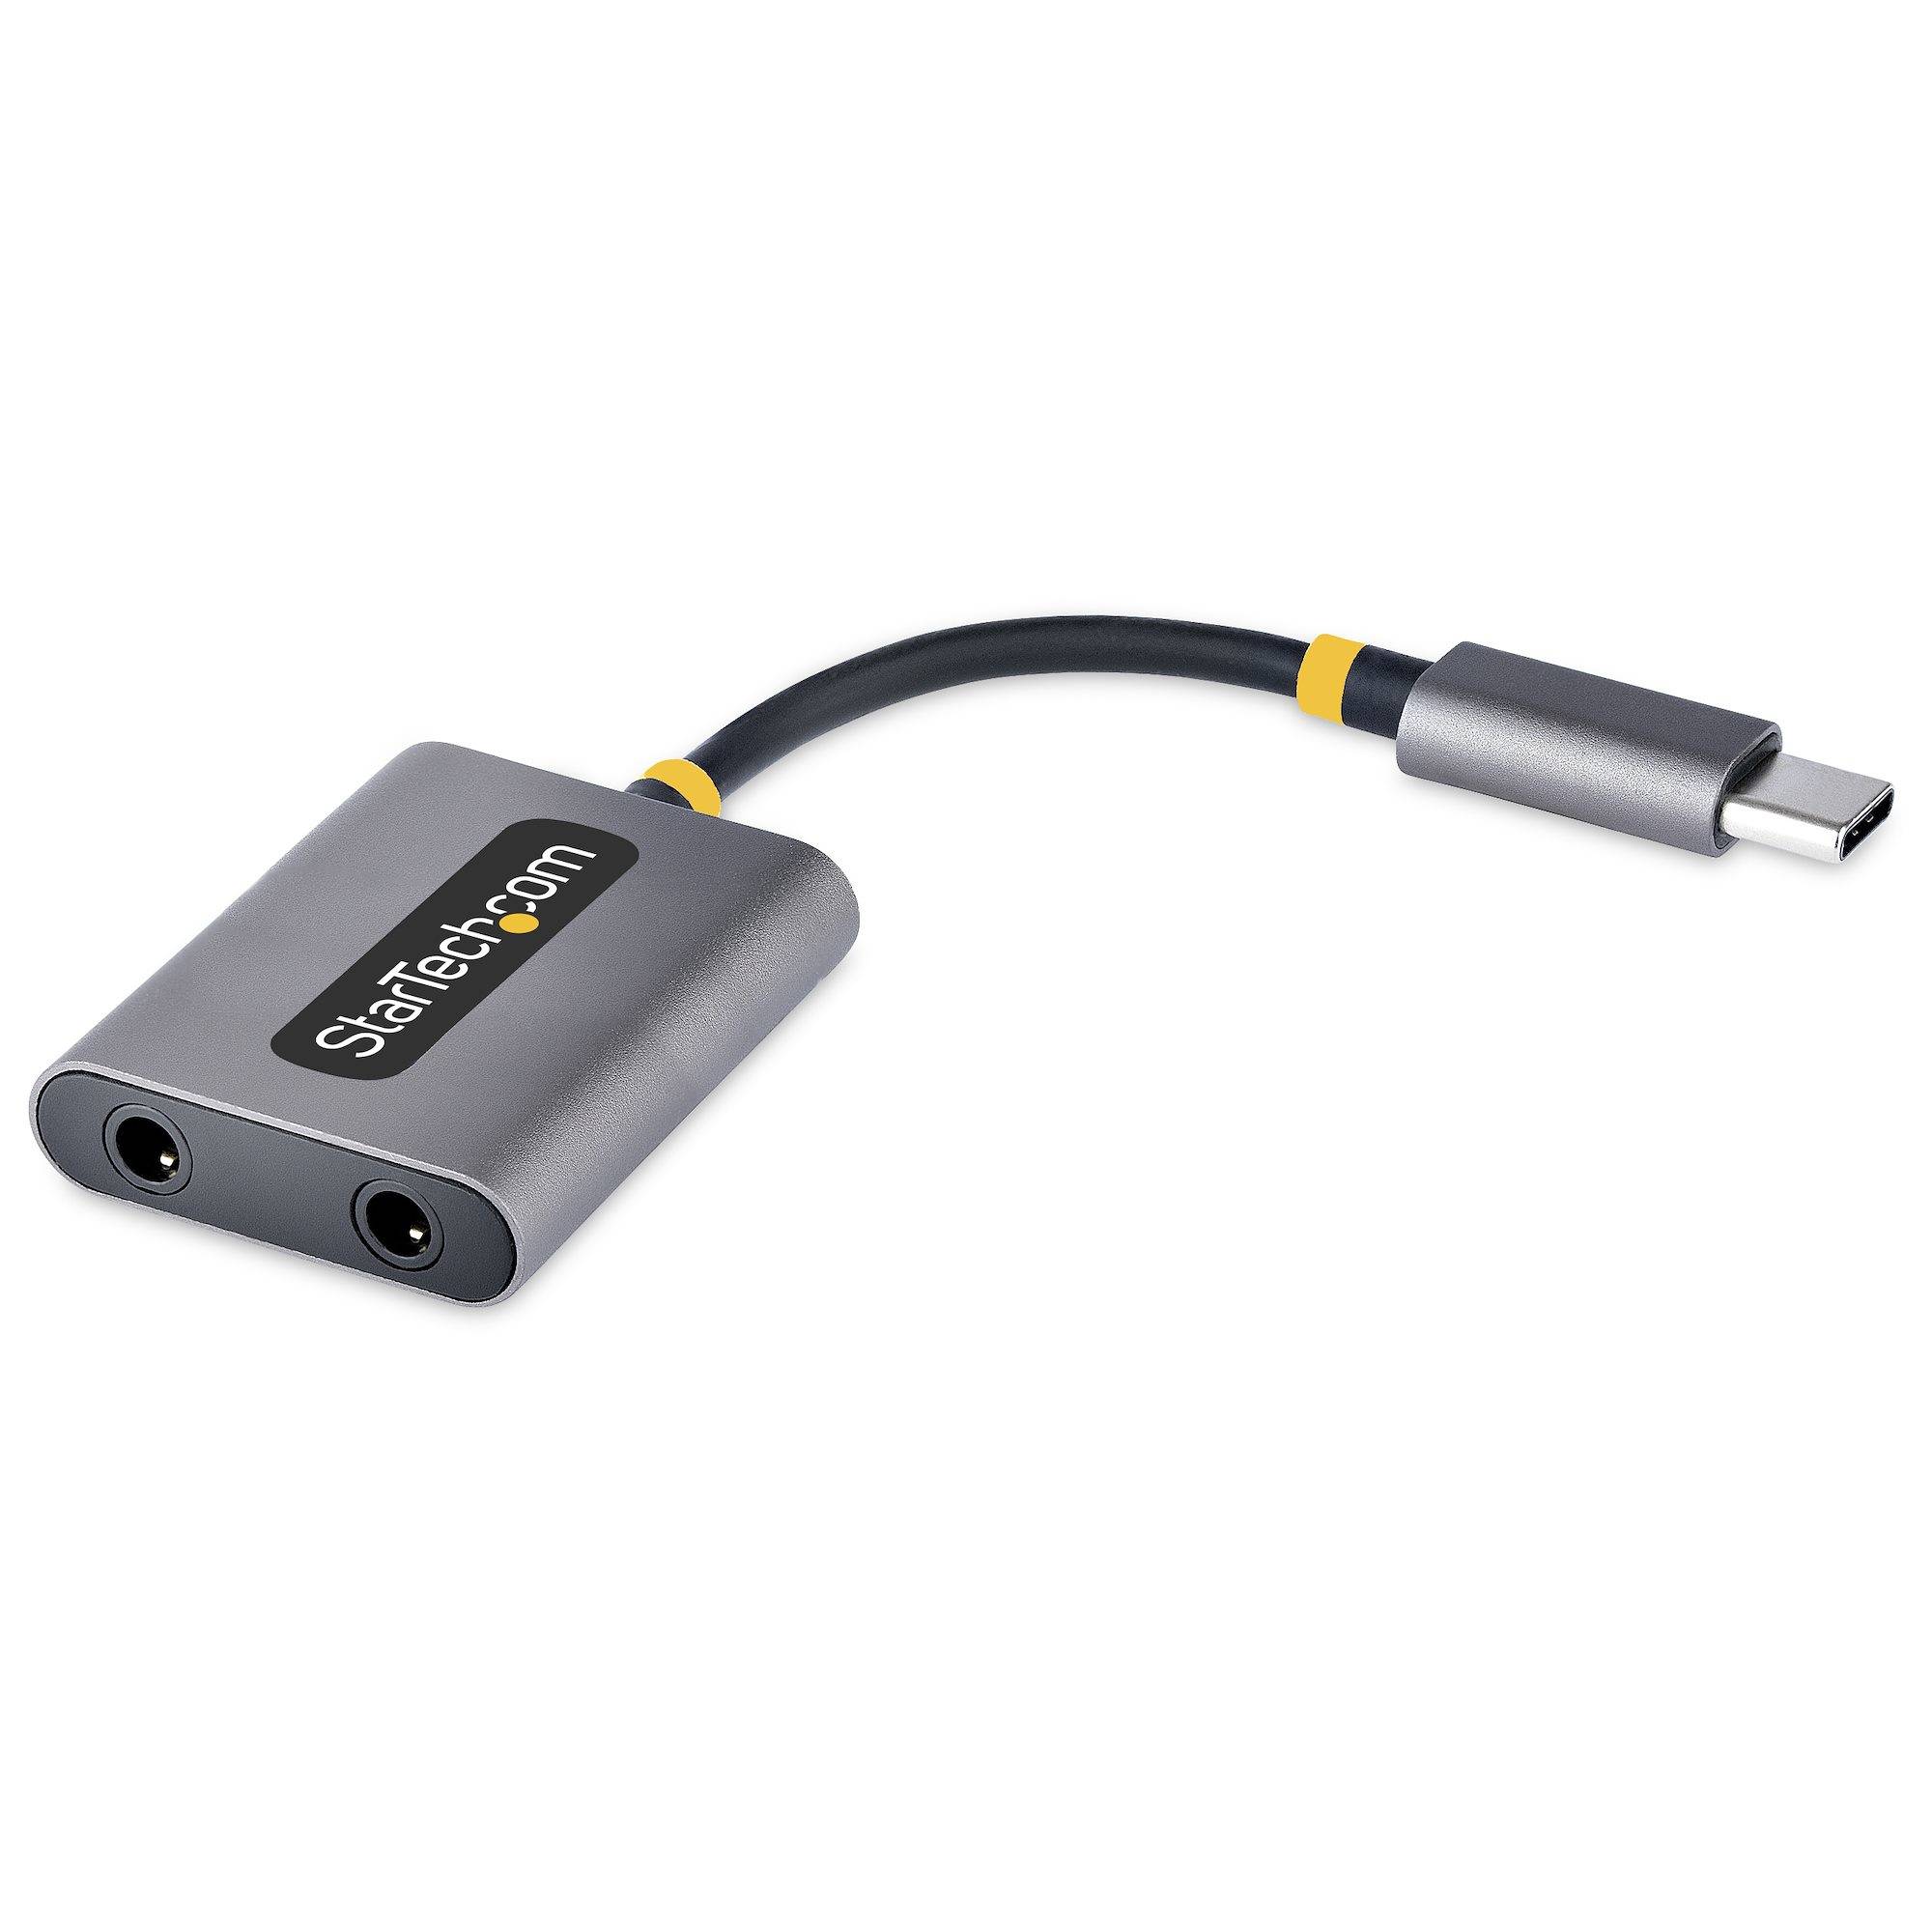 Rca Informatique - image du produit : USB-C HEADPHONE SPLITTER - USB C TO DUAL 3.5MM AUDIO ADAPTER